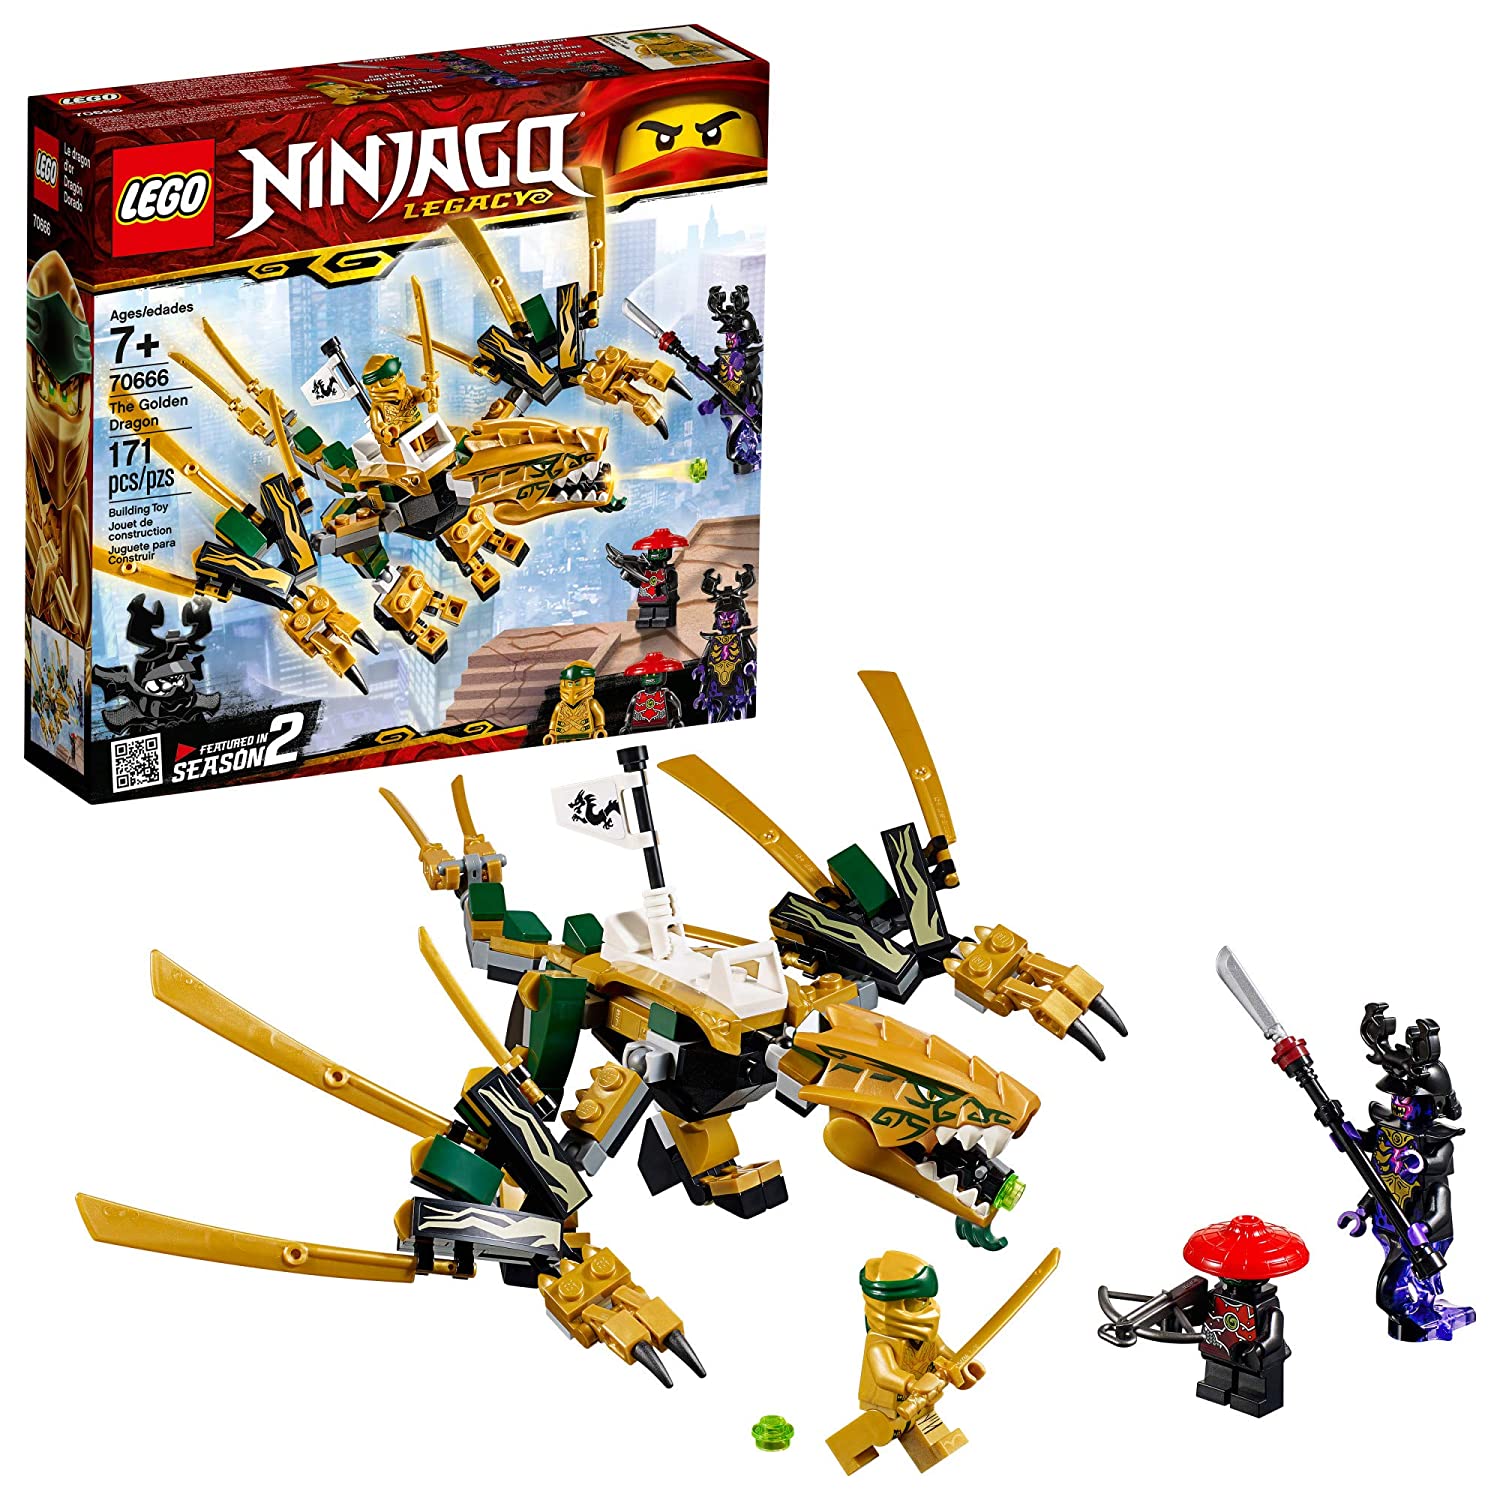 LEGO NINJAGO Legacy Golden Dragon 70666 Building Kit, New 2019 (171 Pieces)